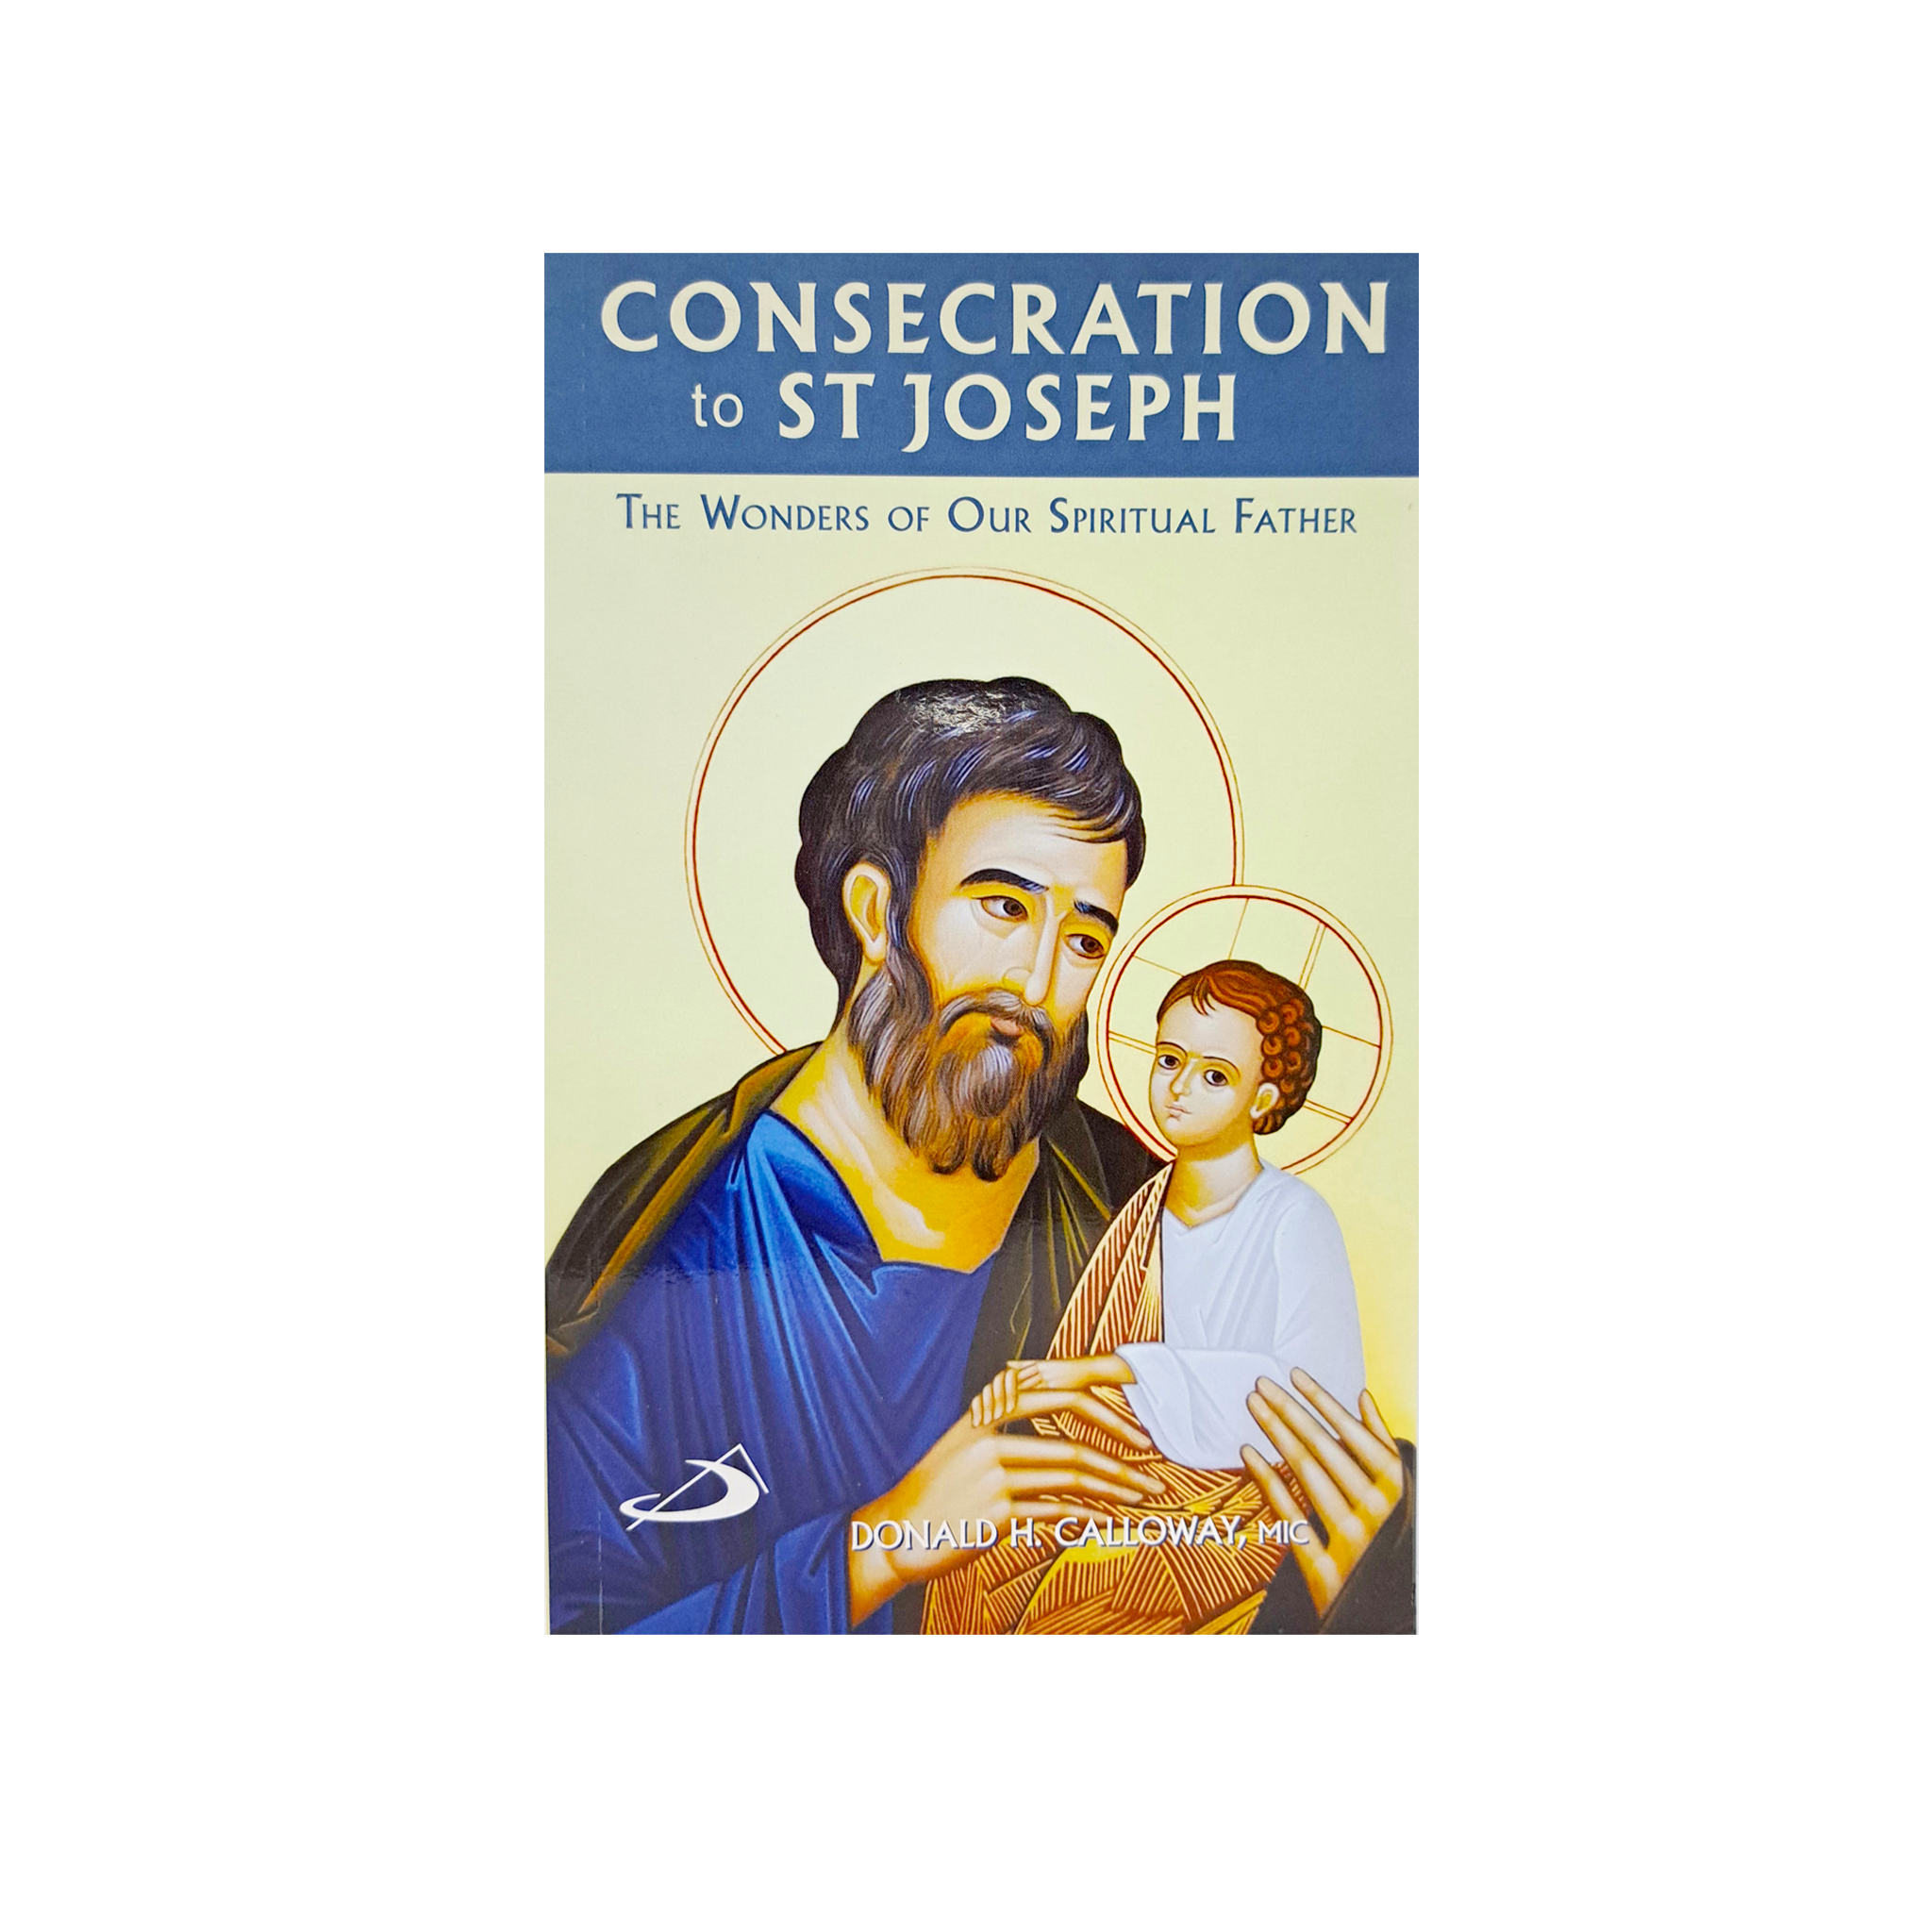 CONSECRATION TO ST JOSEPH